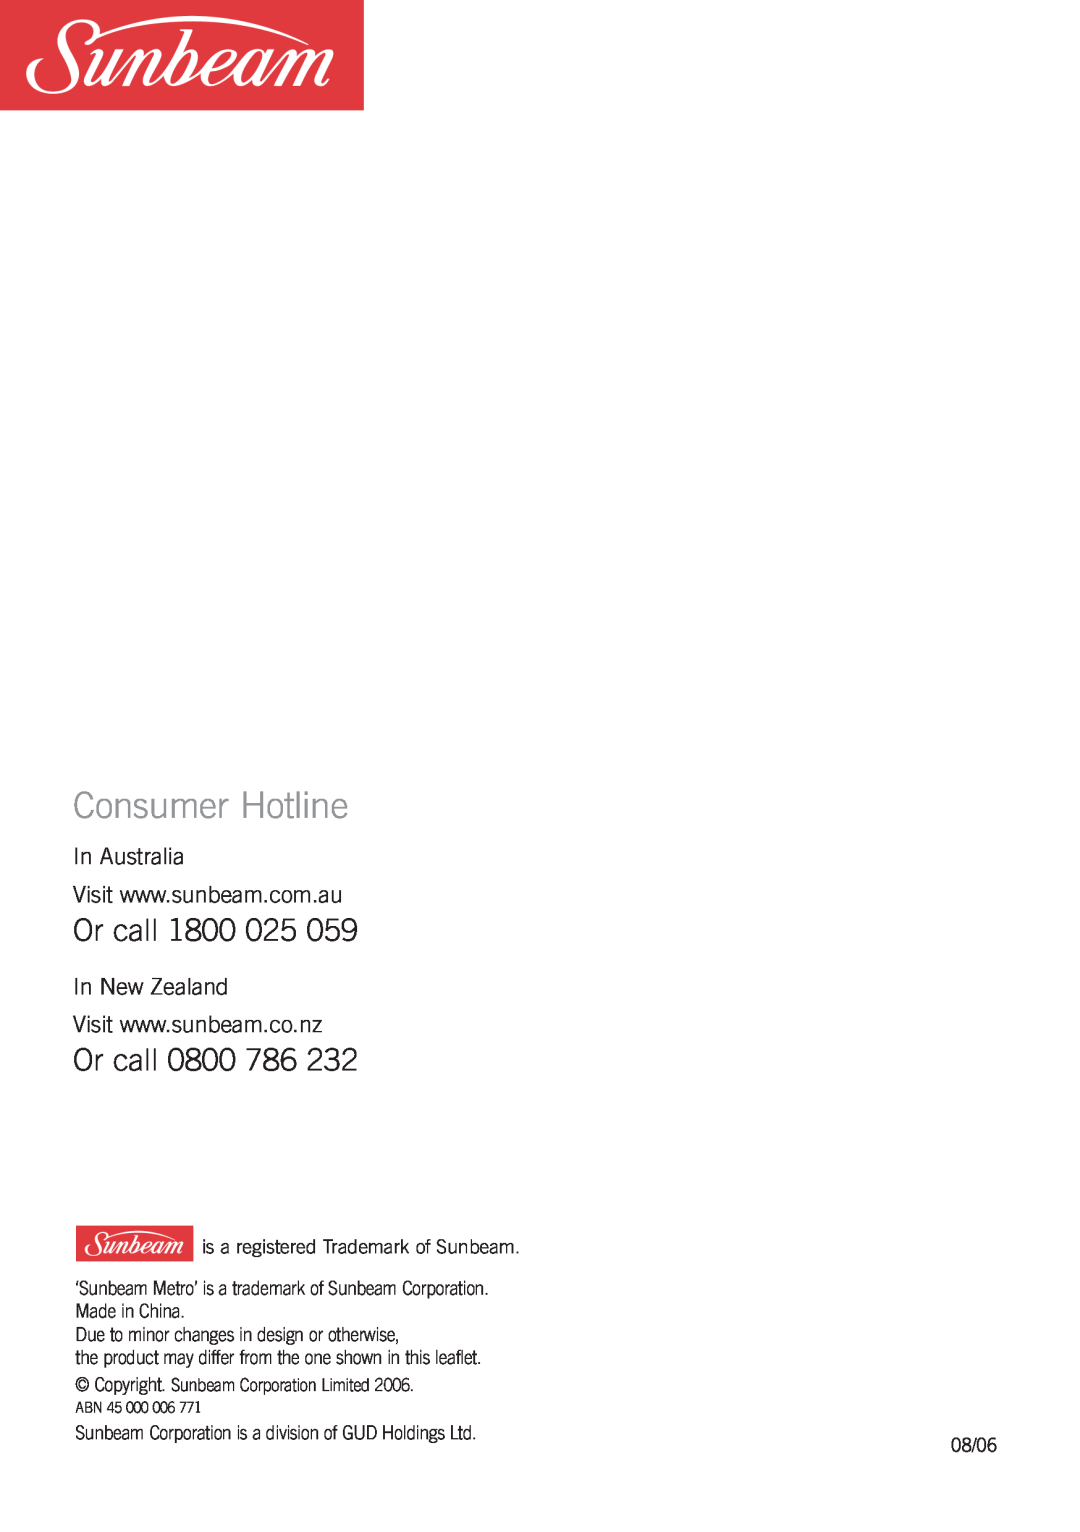 Sunbeam TA6450 manual Or call, Consumer Hotline 